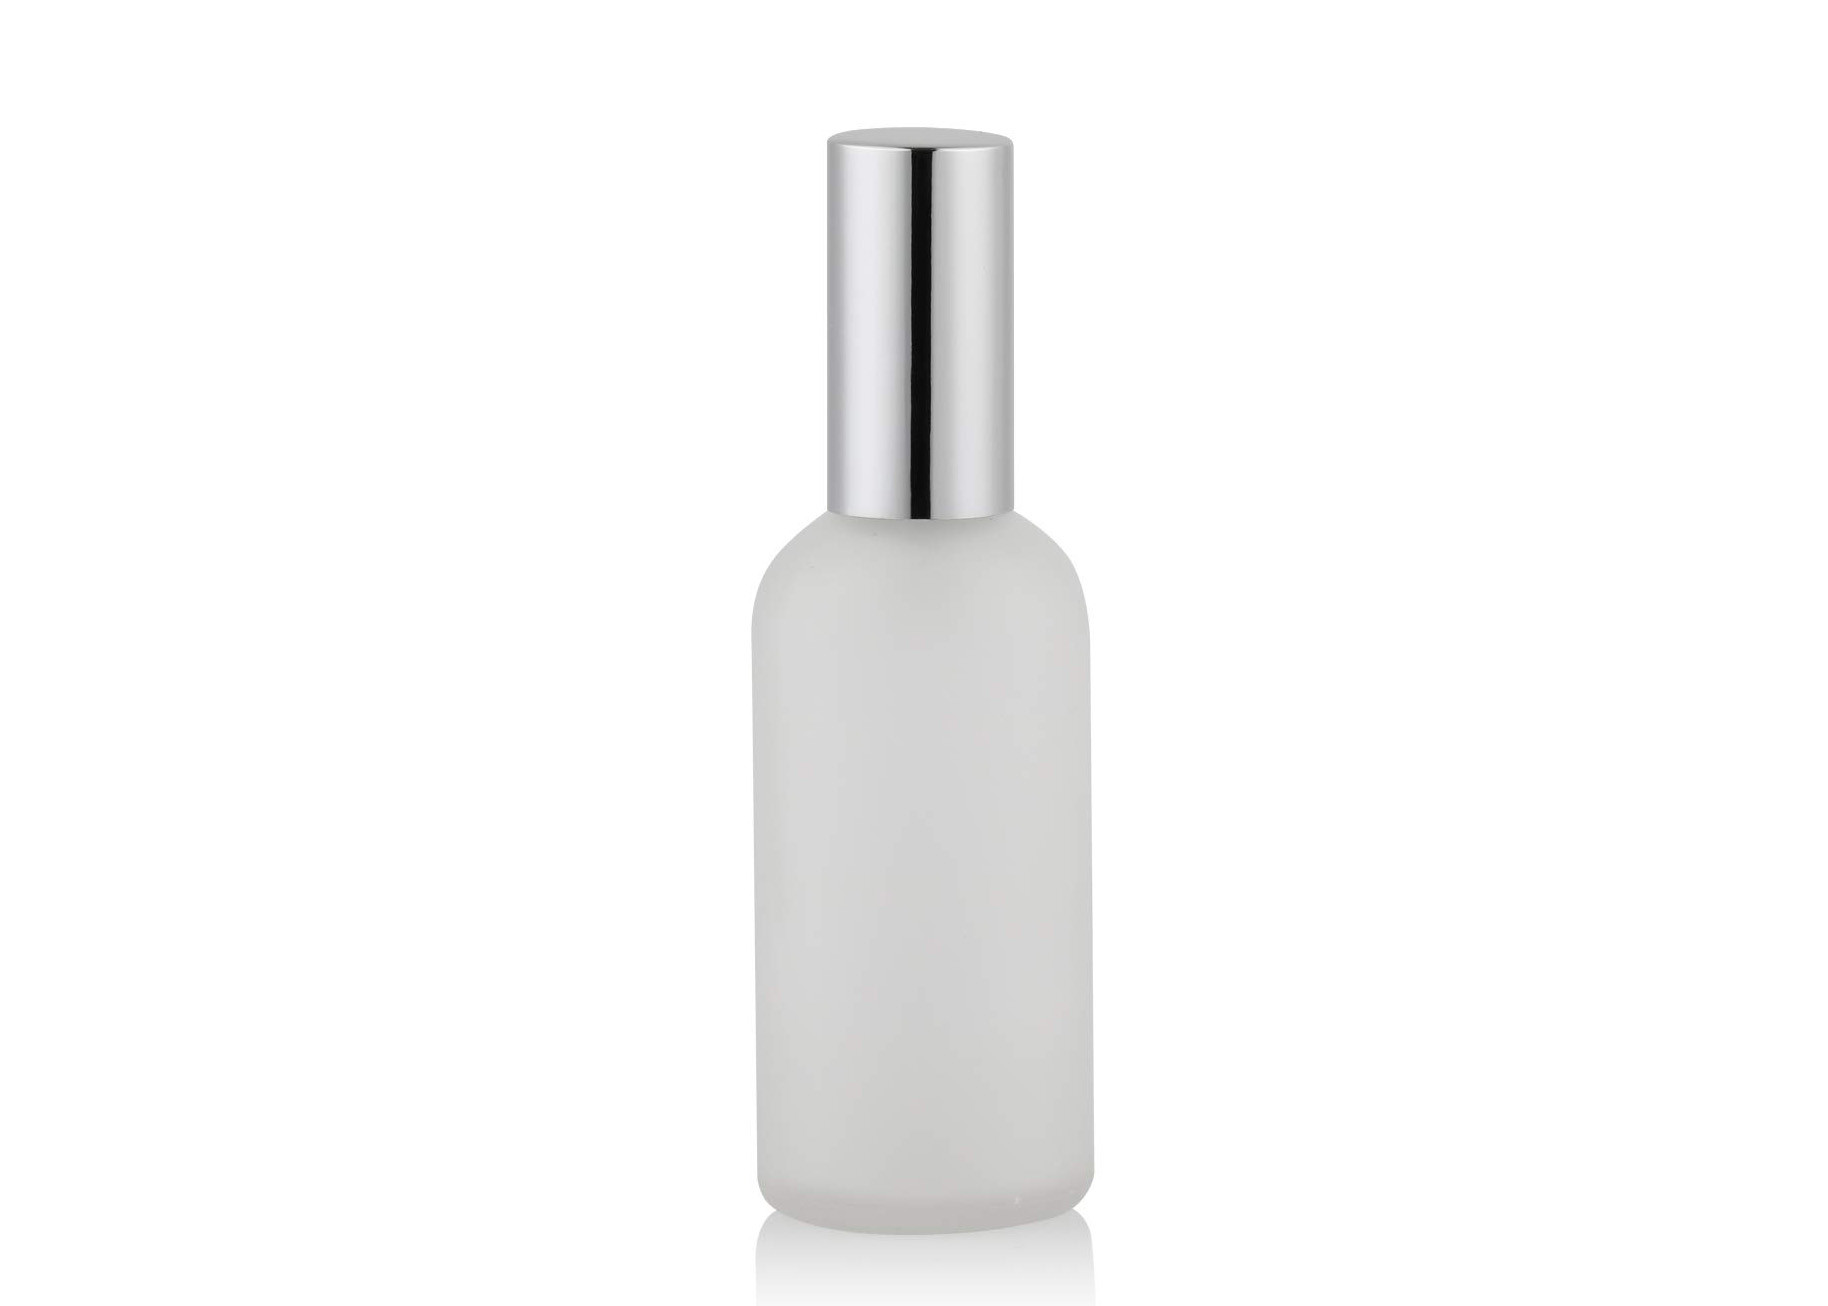 O pulverizador cosmético claro geado engarrafa a garrafa de perfume recarregável durável